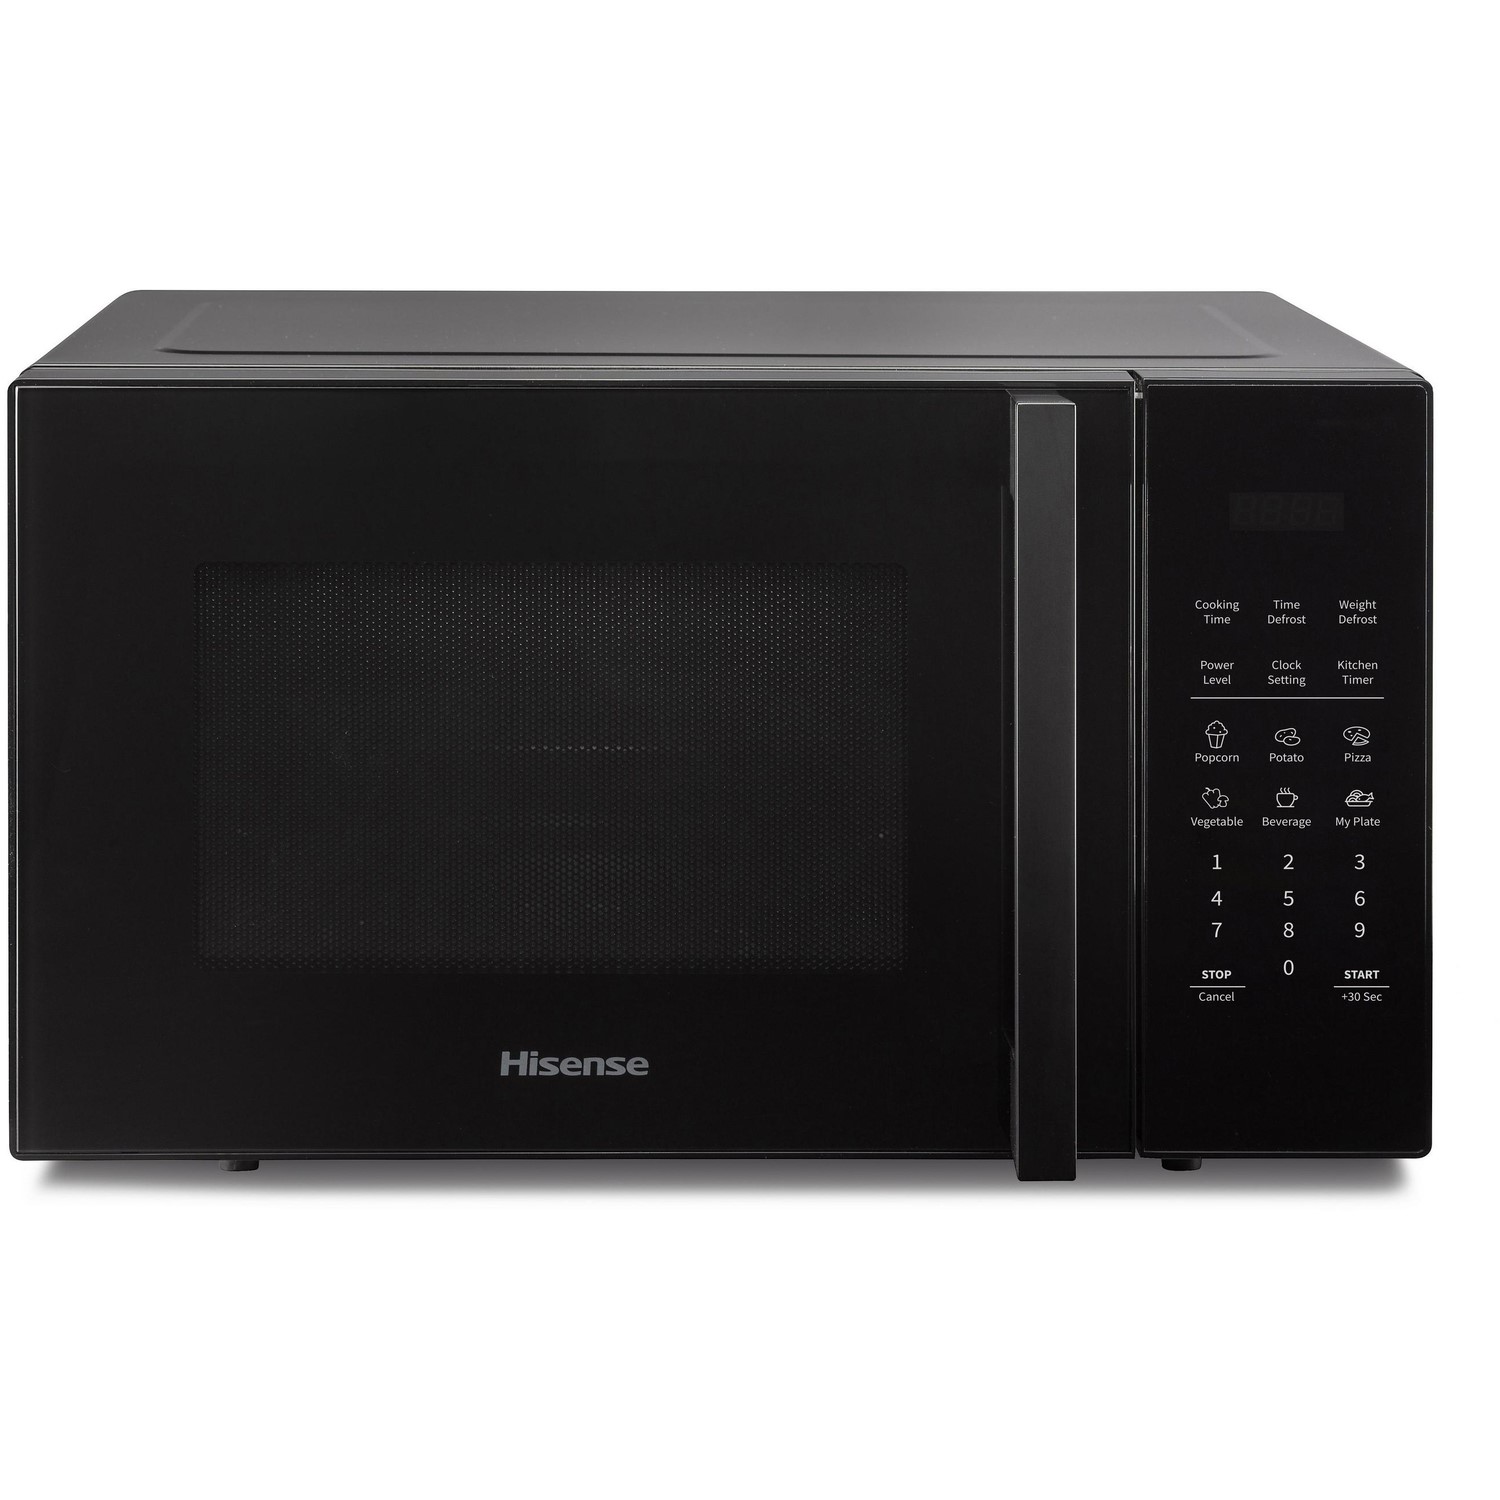 Hisense 23L Digital Microwave Oven - Black